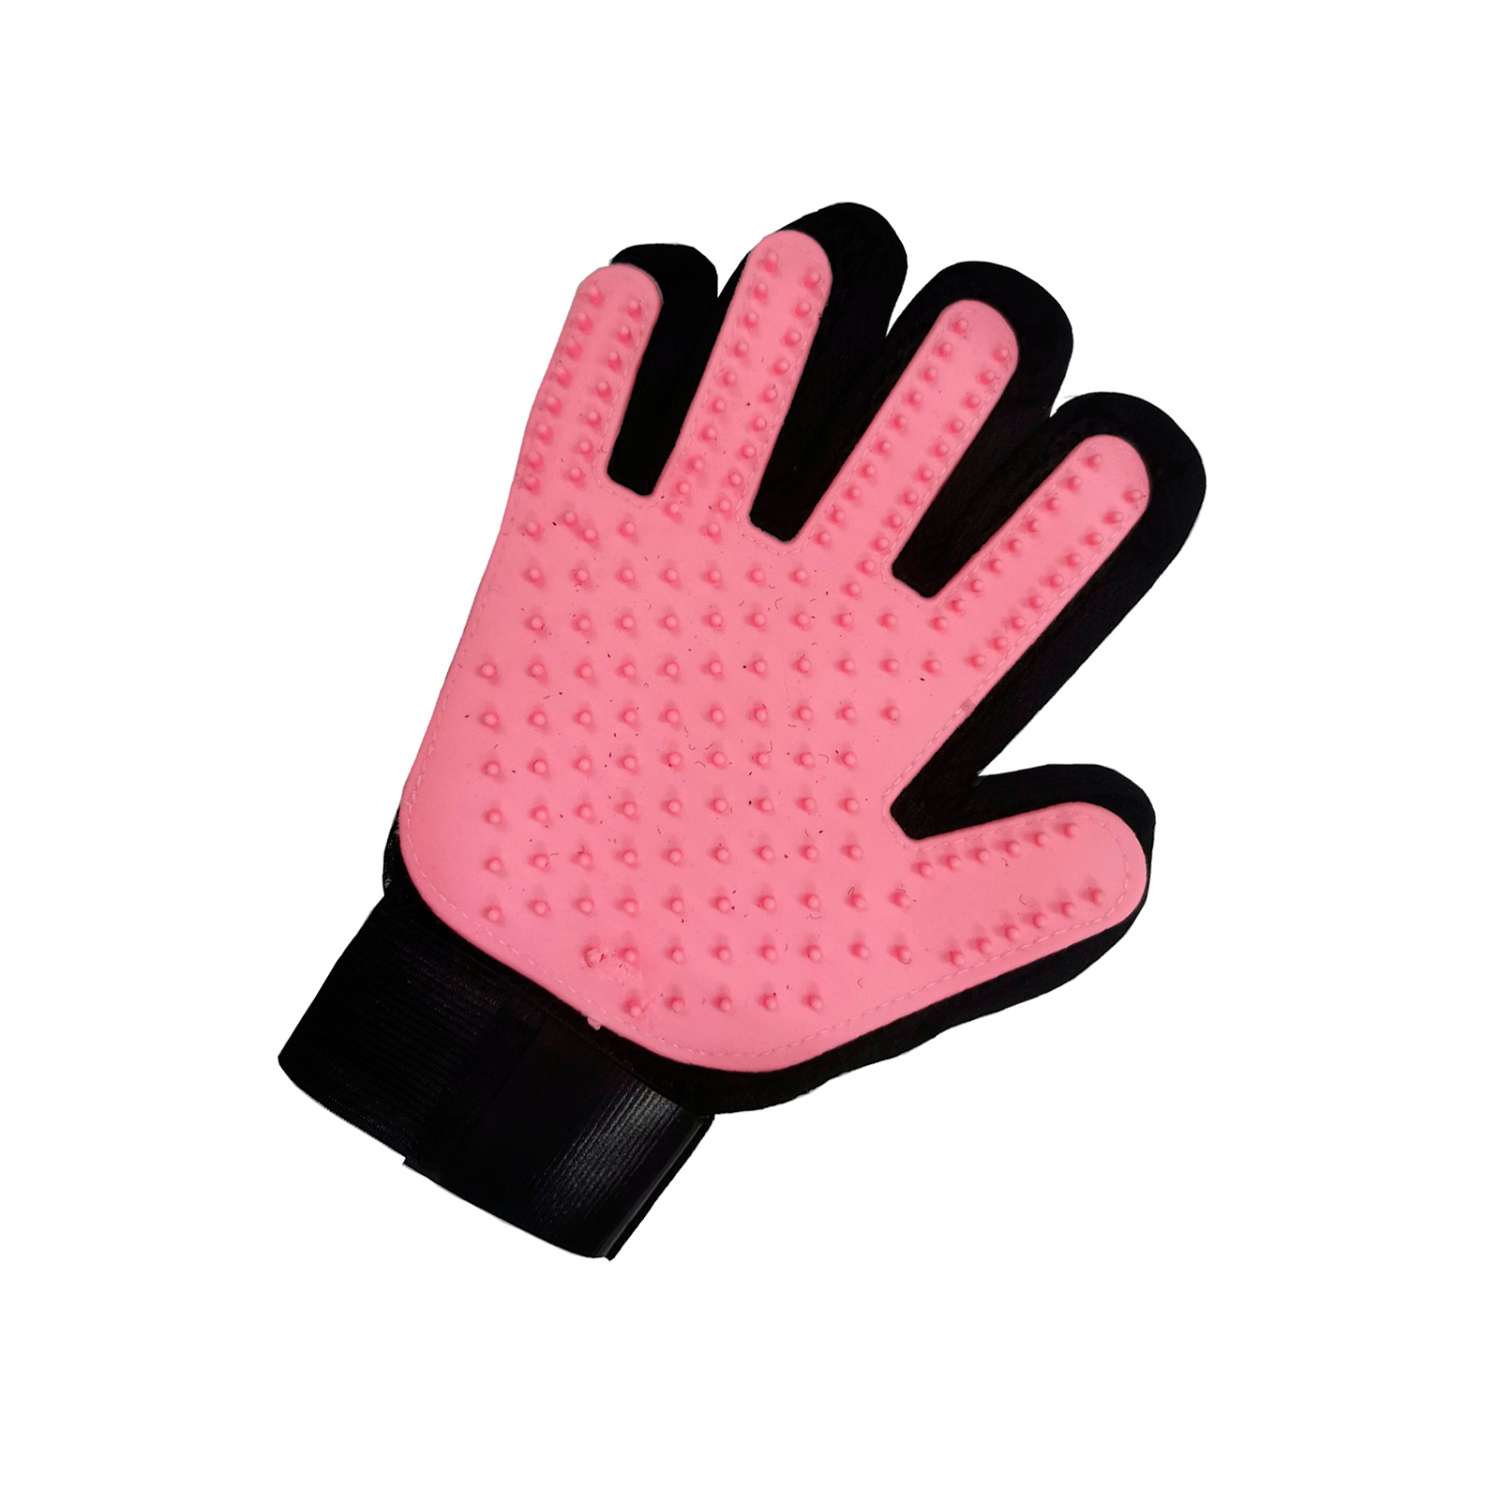 Перчатка для груминга Stefan массажная для вычесывания шерсти животных розовая 23х17см - фото 1